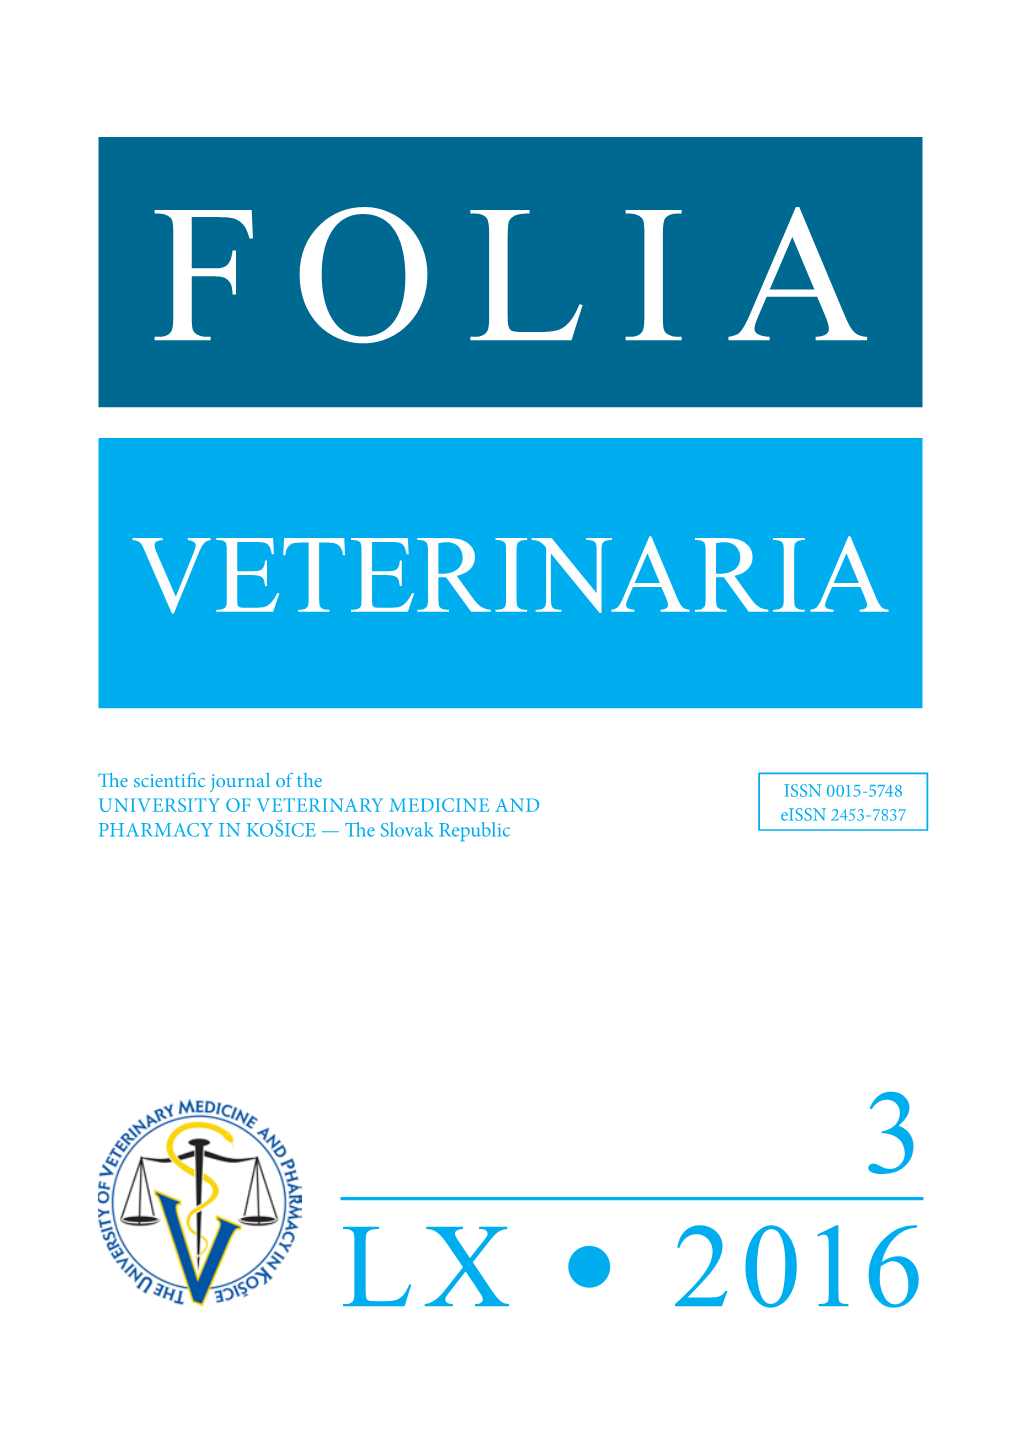 FOLIA VETERINARIA Is a Scientific Journal Issued by the University of Veterinary Medicine and Pharmacy in Košice, Komenského 73, 041 81 Košice, the Slovak Republic